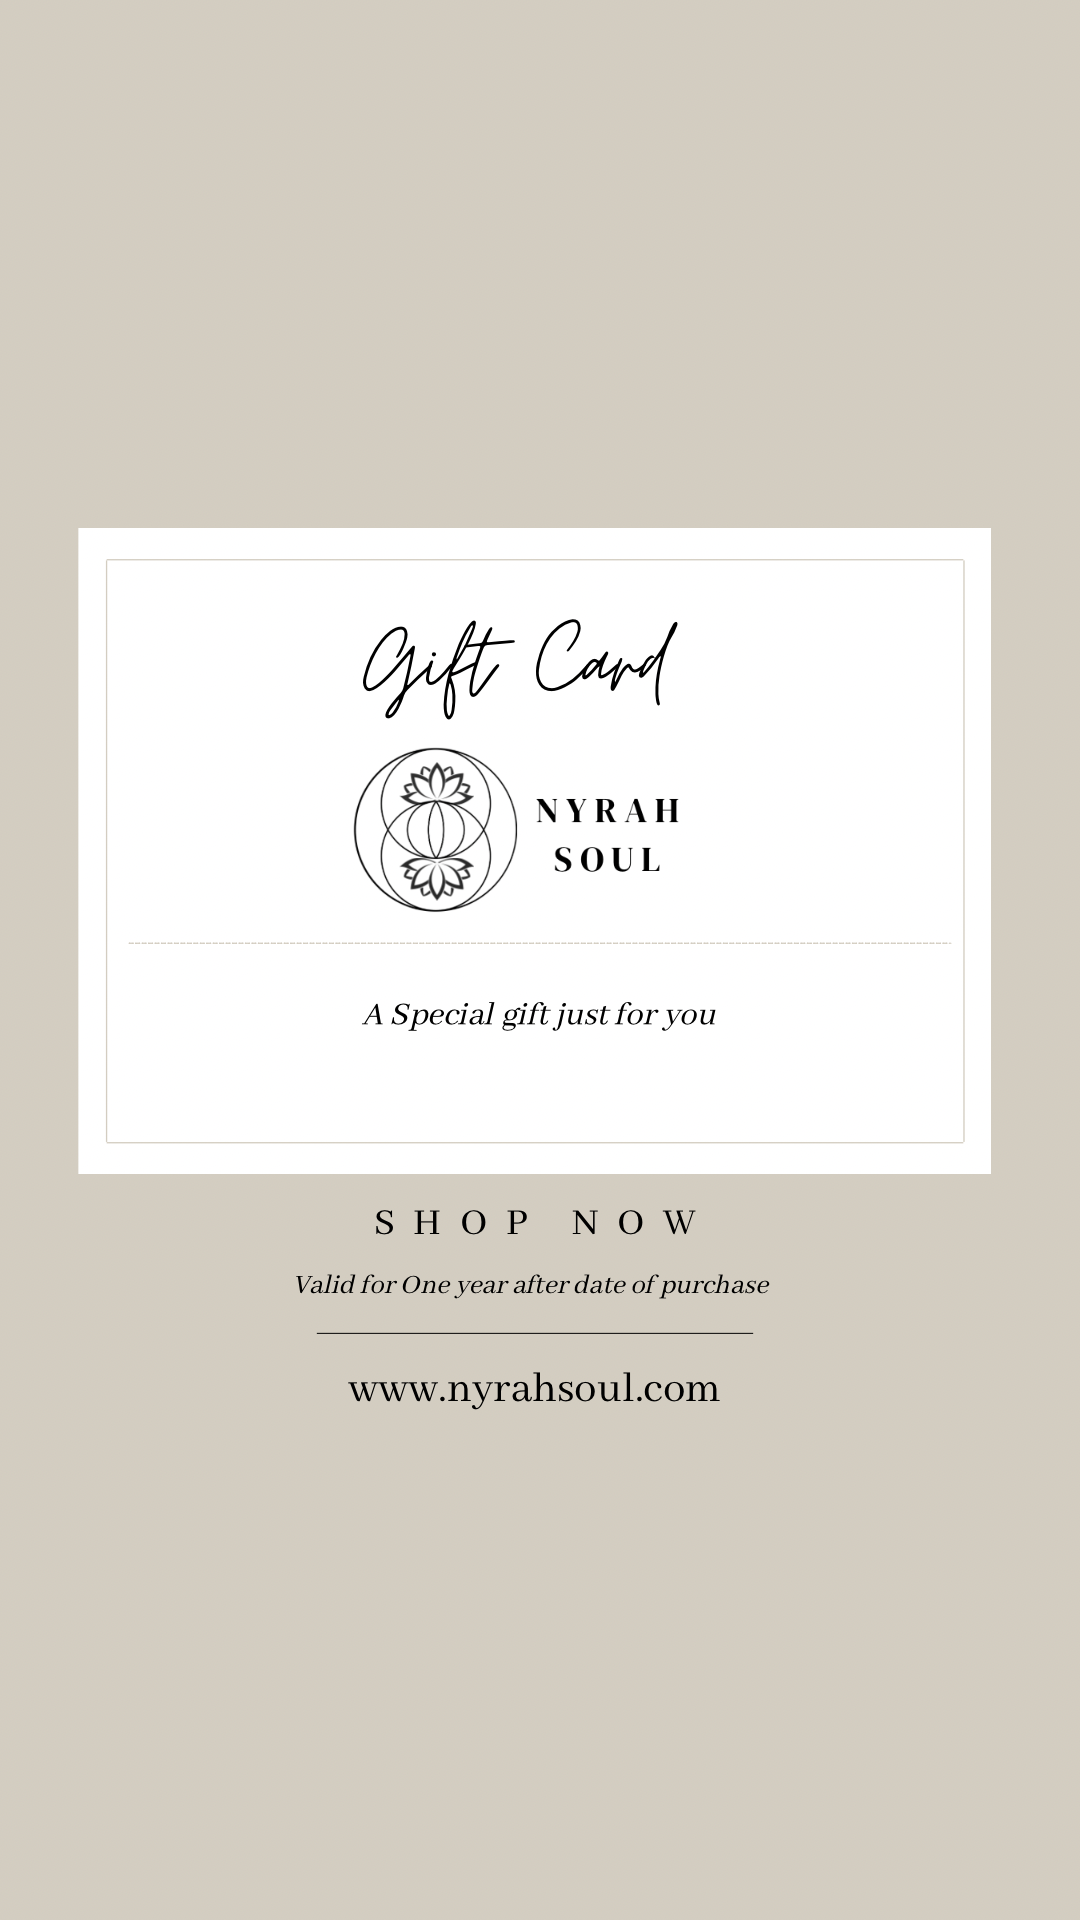 Nyrah Soul Gift Cards